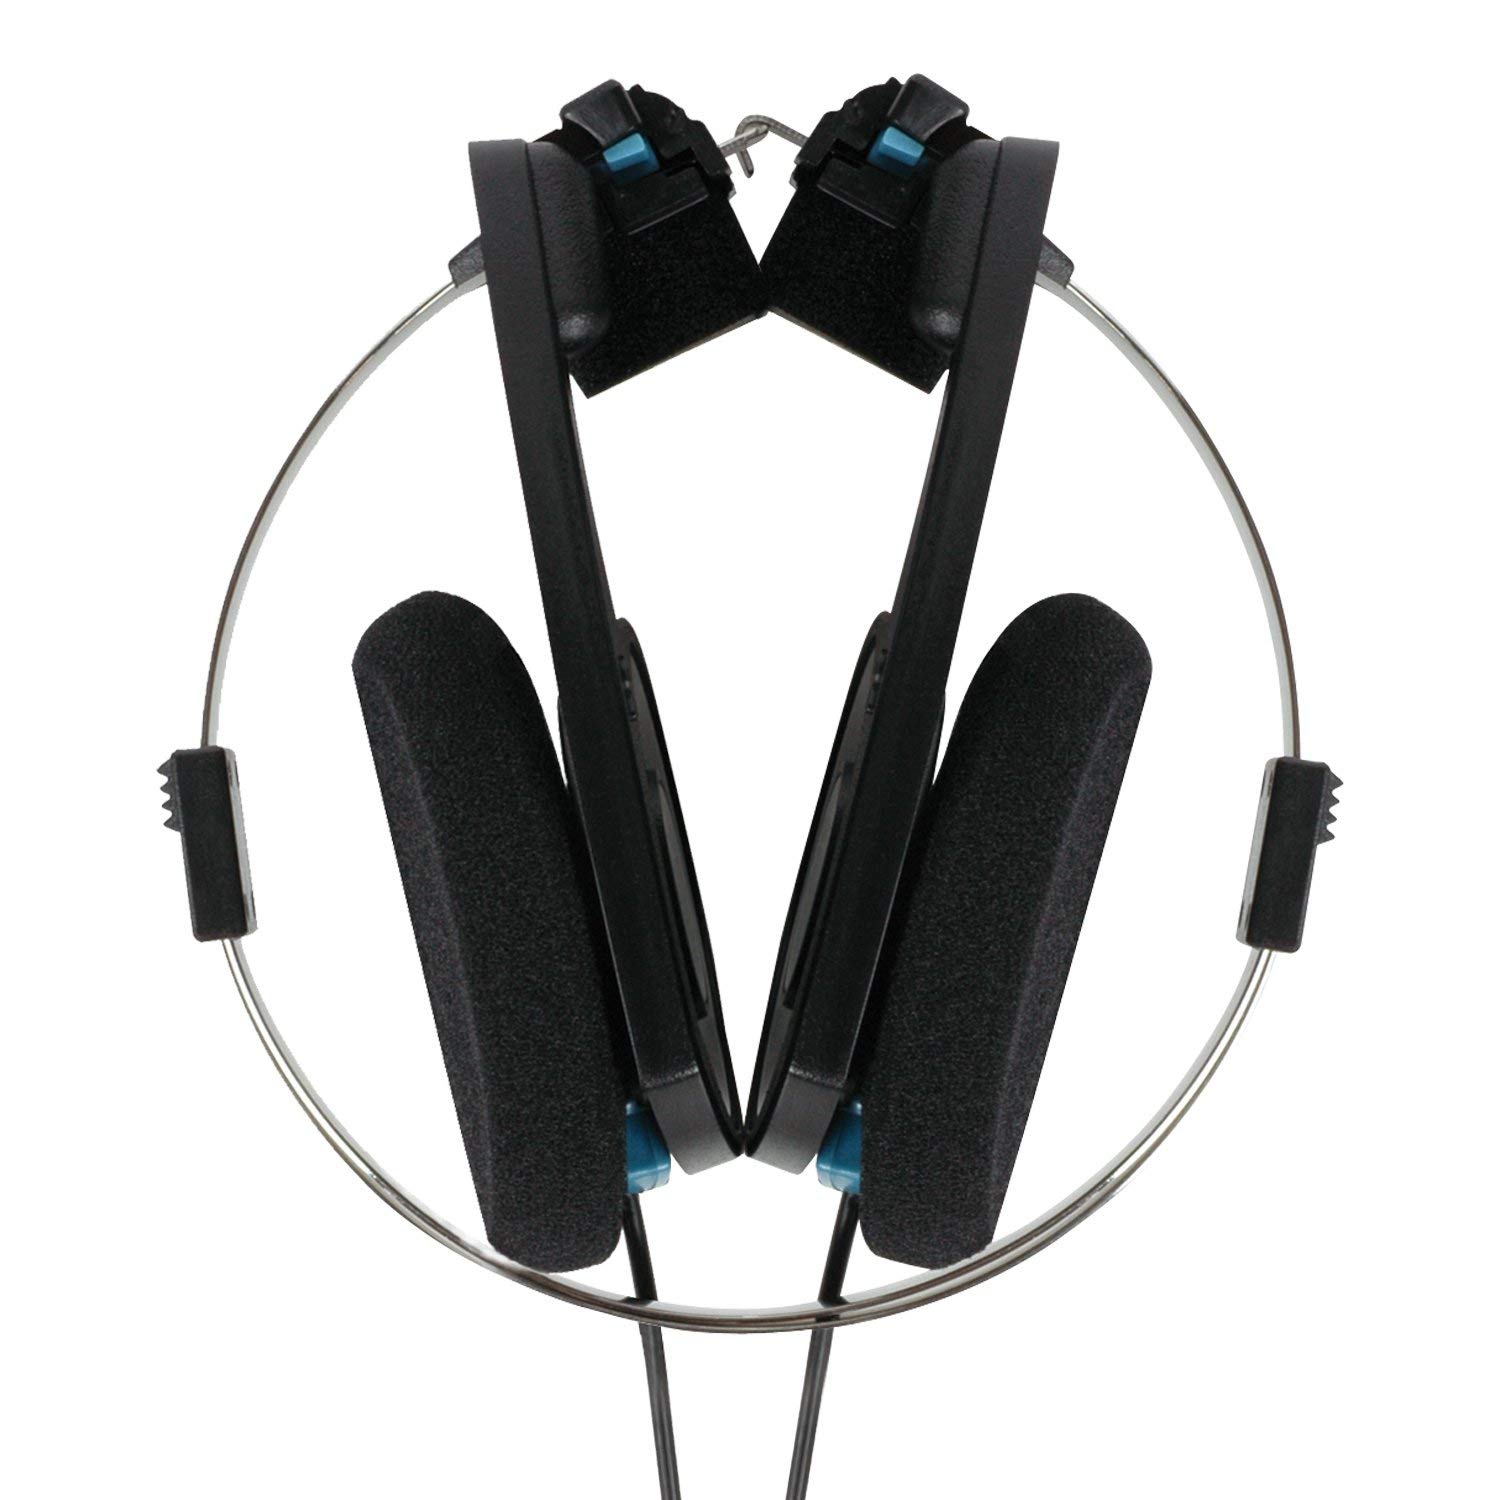 Koss PortaPro Headphones with Case   Best Buy Canada